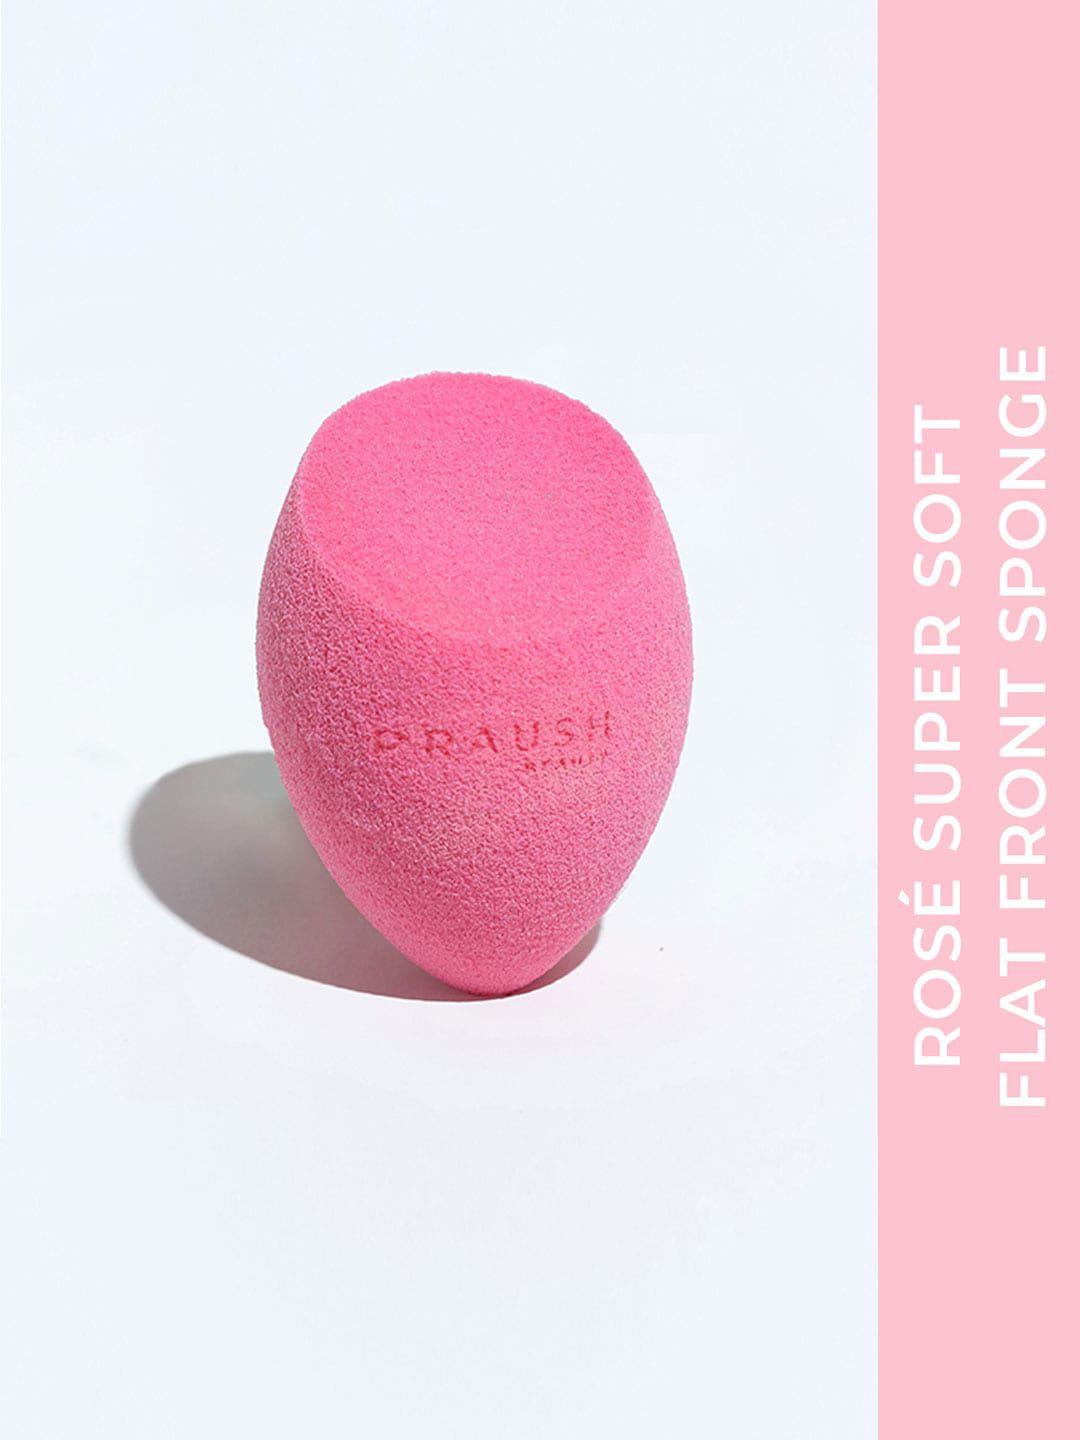 praush rose super soft flat front sponge - pink